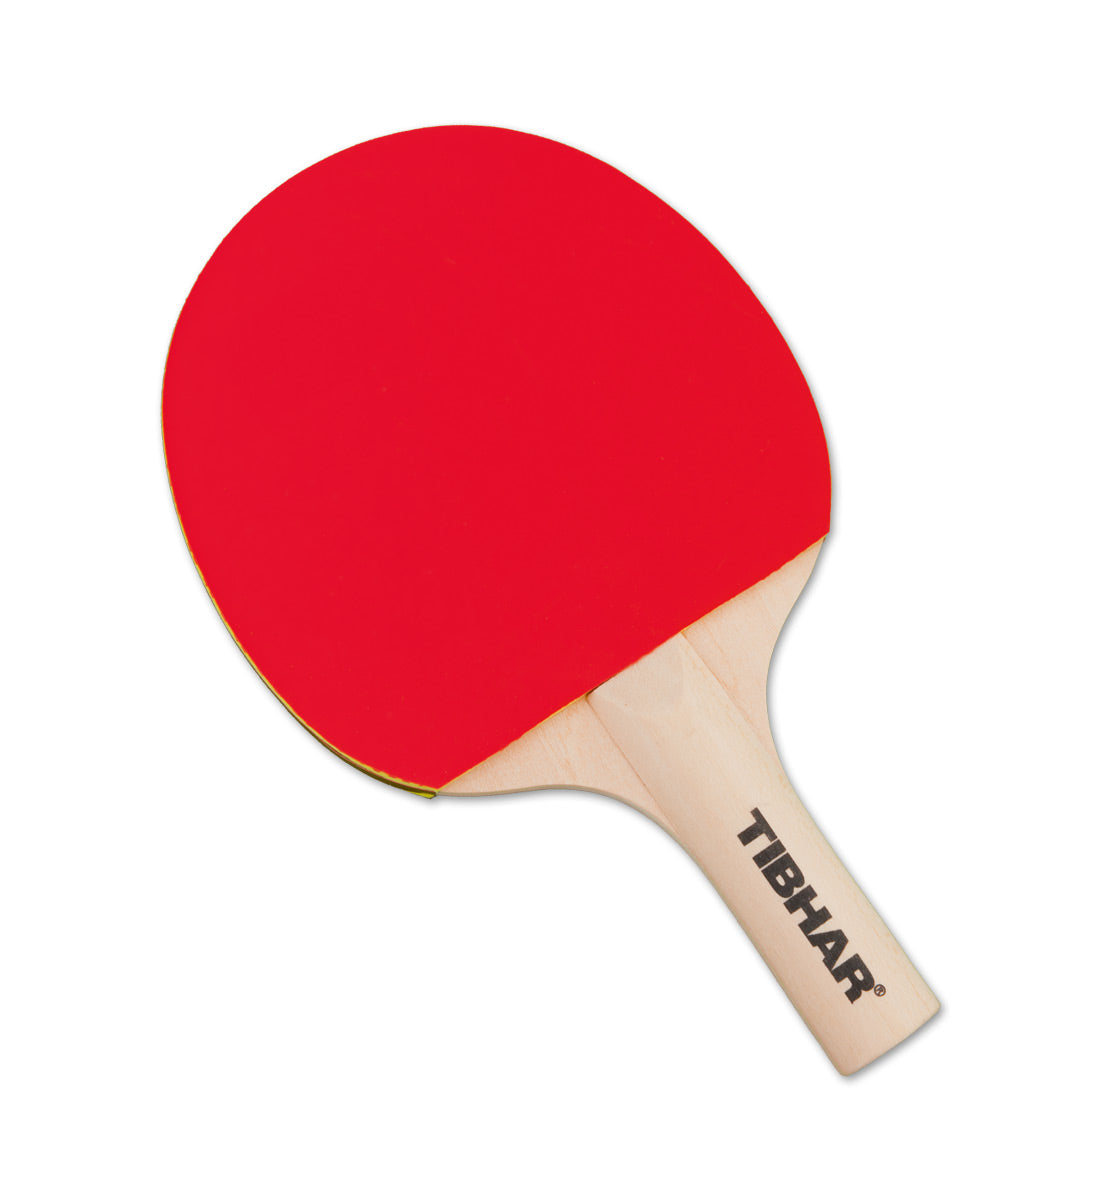 Red Ping Pong Paddle  Ping pong, Ping pong table tennis, Ping